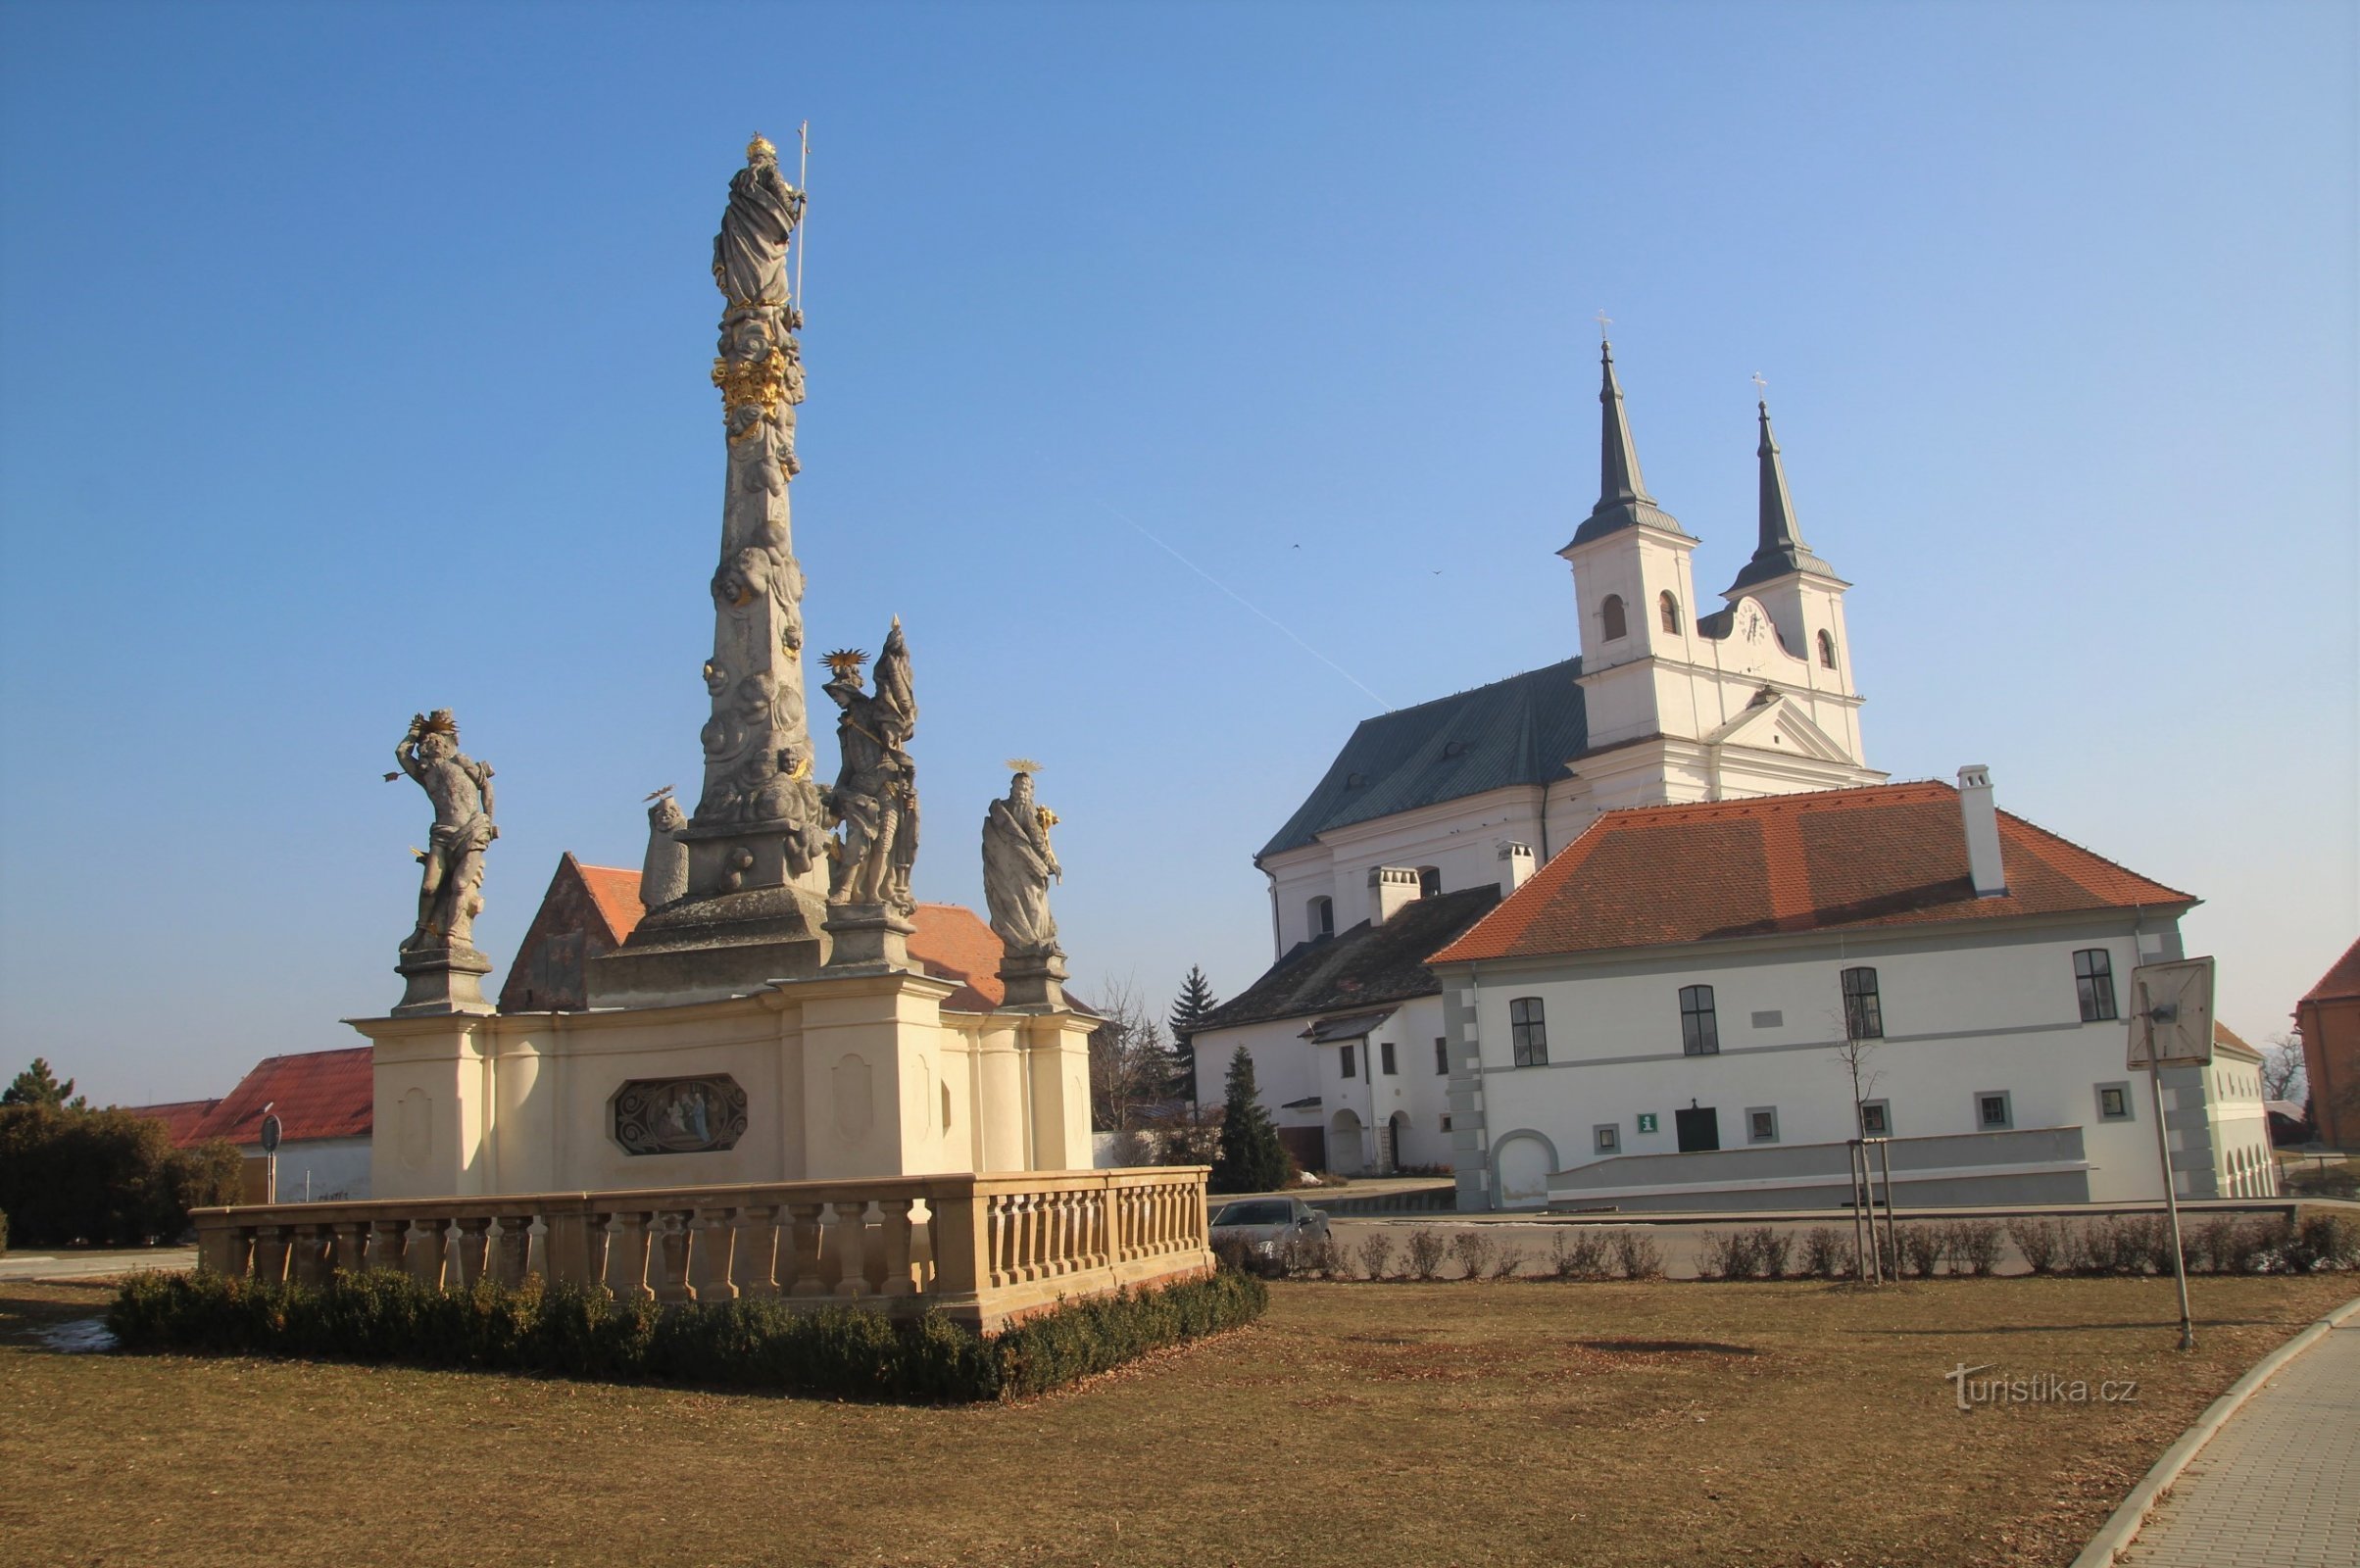 Drnholecké náměstí com a coluna mariana, a antiga prefeitura e a Igreja da Santíssima Trindade